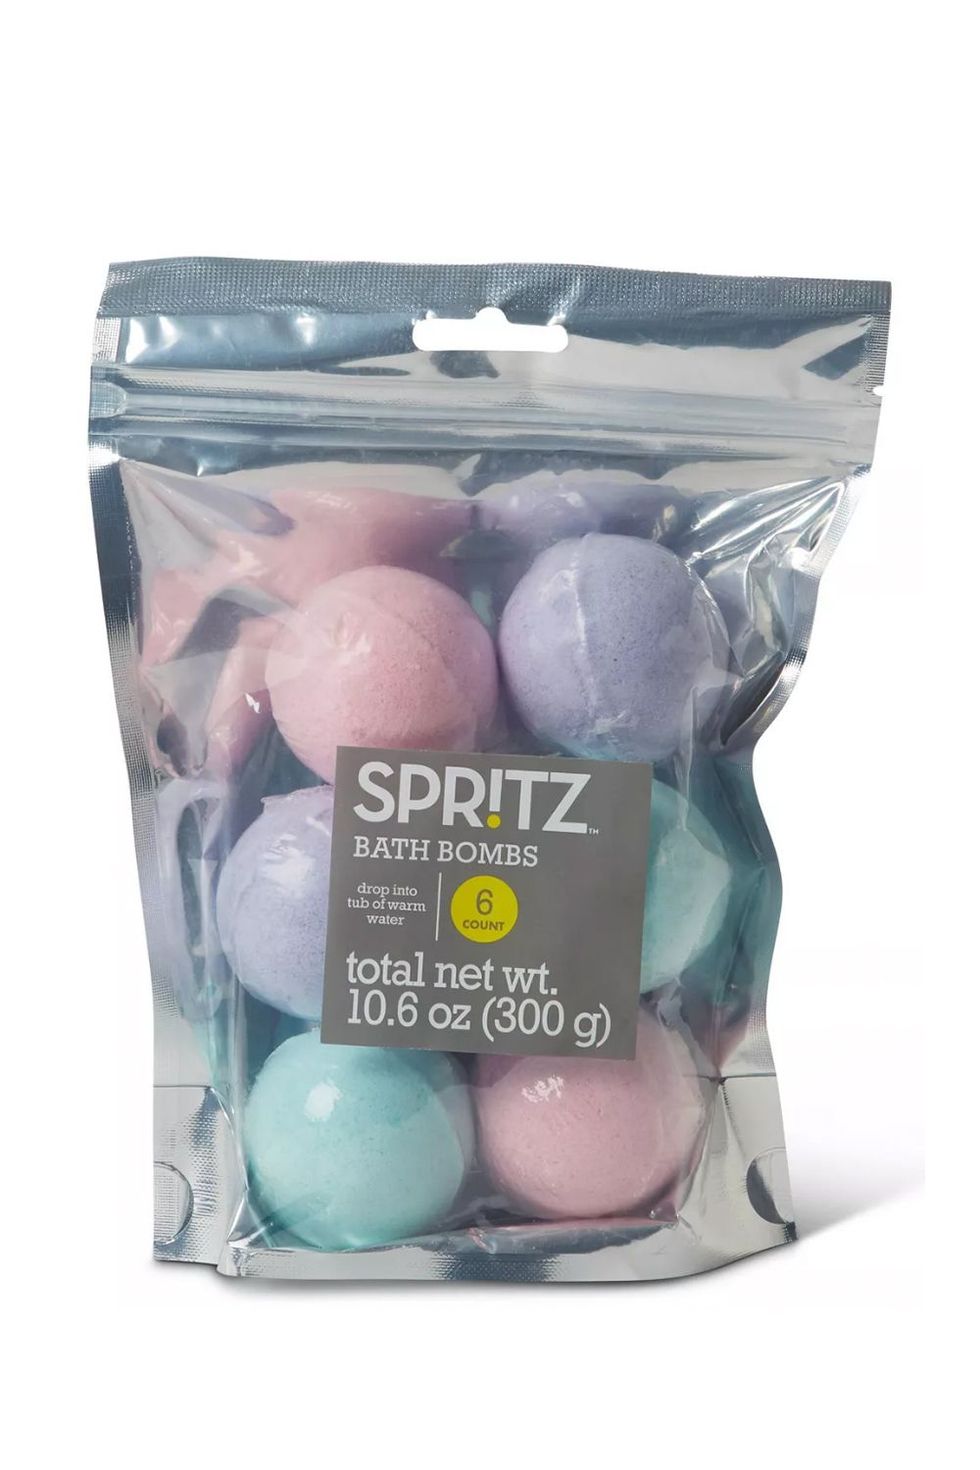 Spritz Bath Bombs